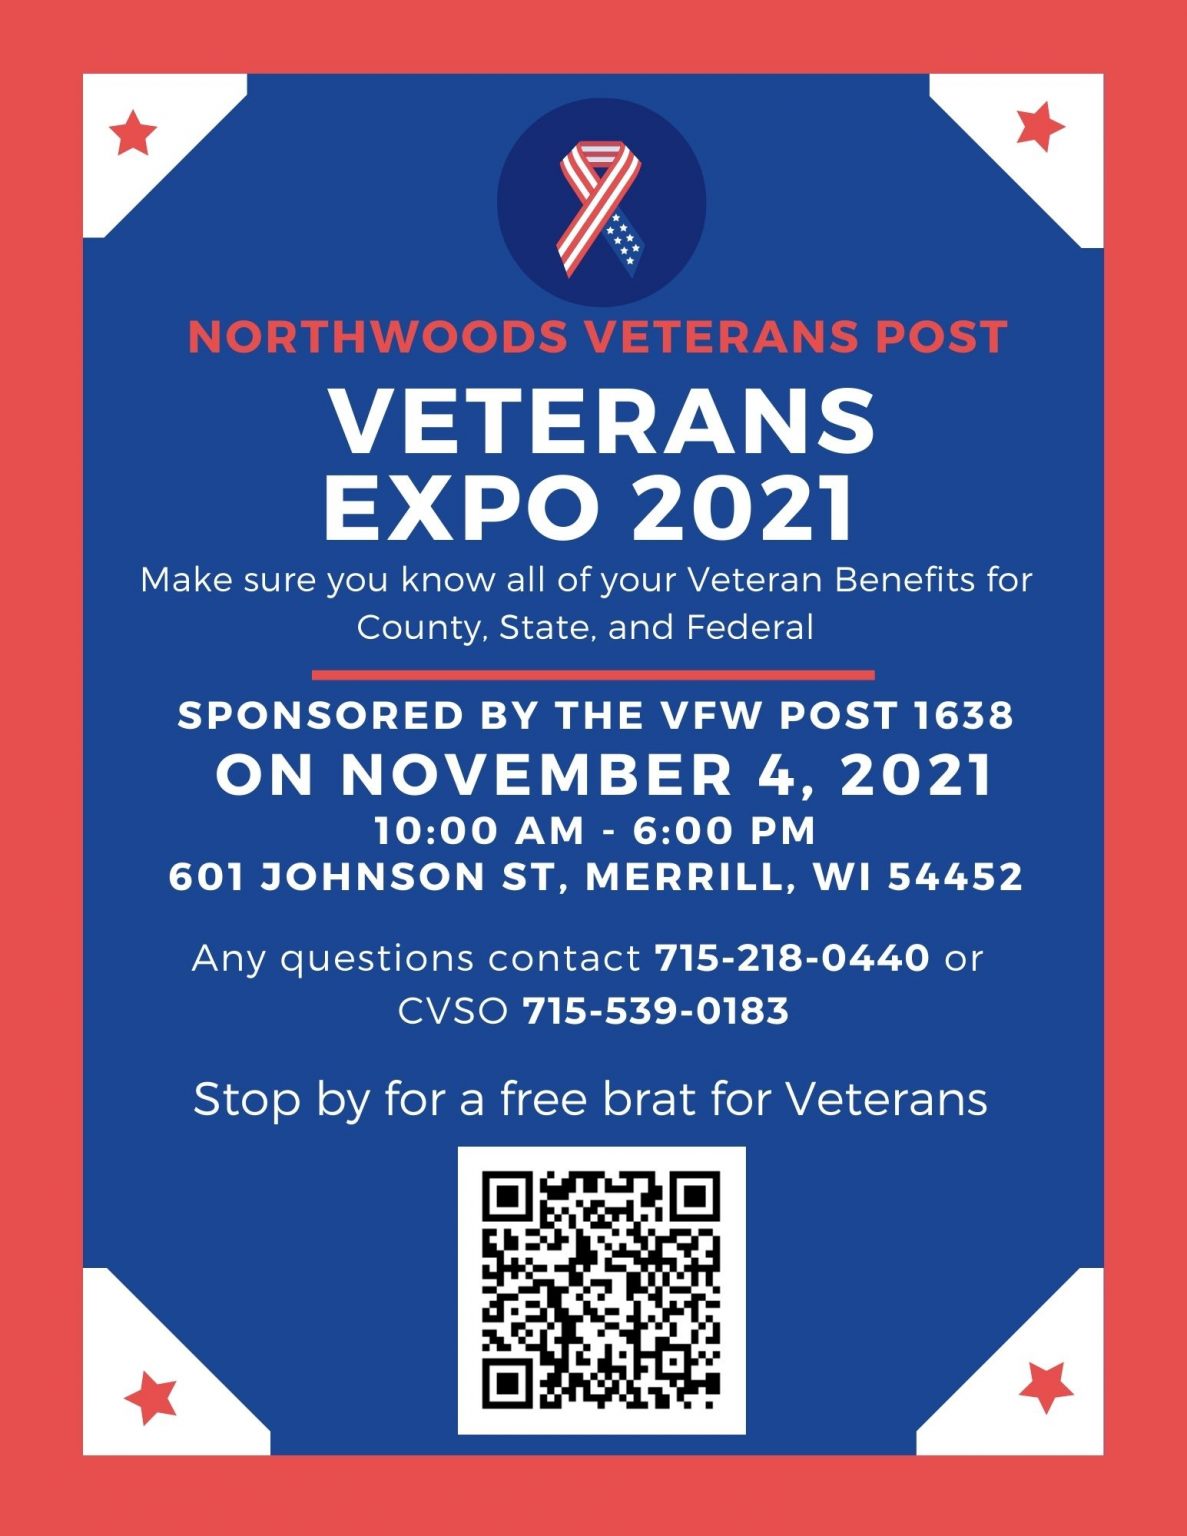 VETERANS EXPO 2021 Northwoods Veterans Post